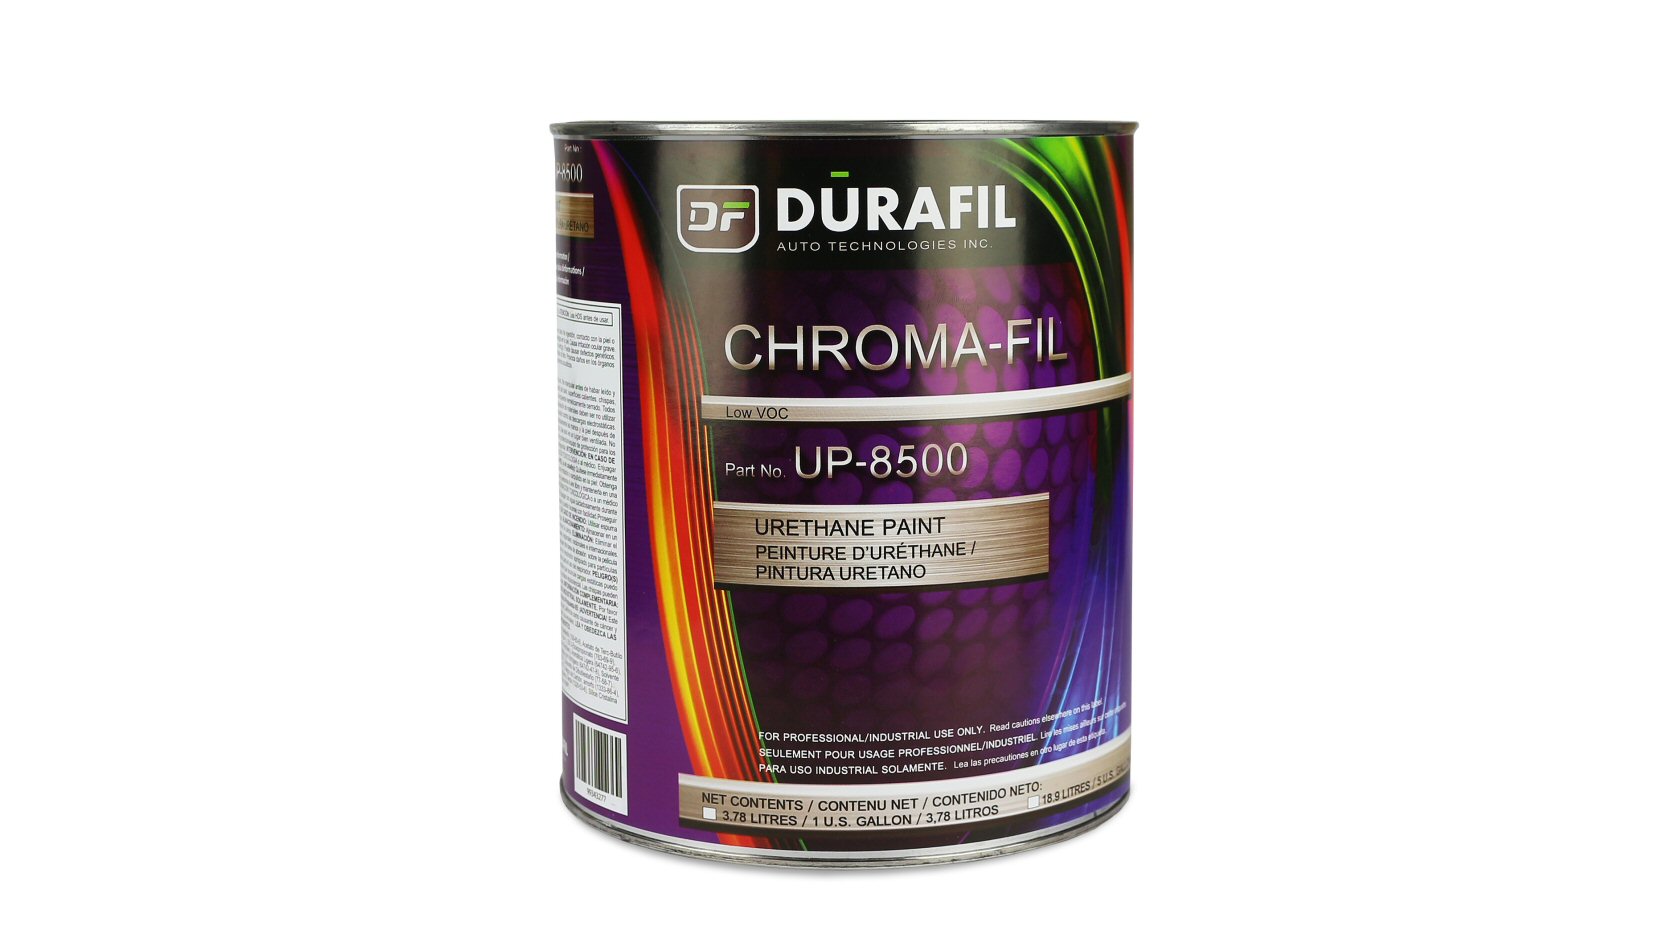 UP-8500 Chroma-Fil Single Stage Urethane Paint – Black / Grey / White / Dark Colors